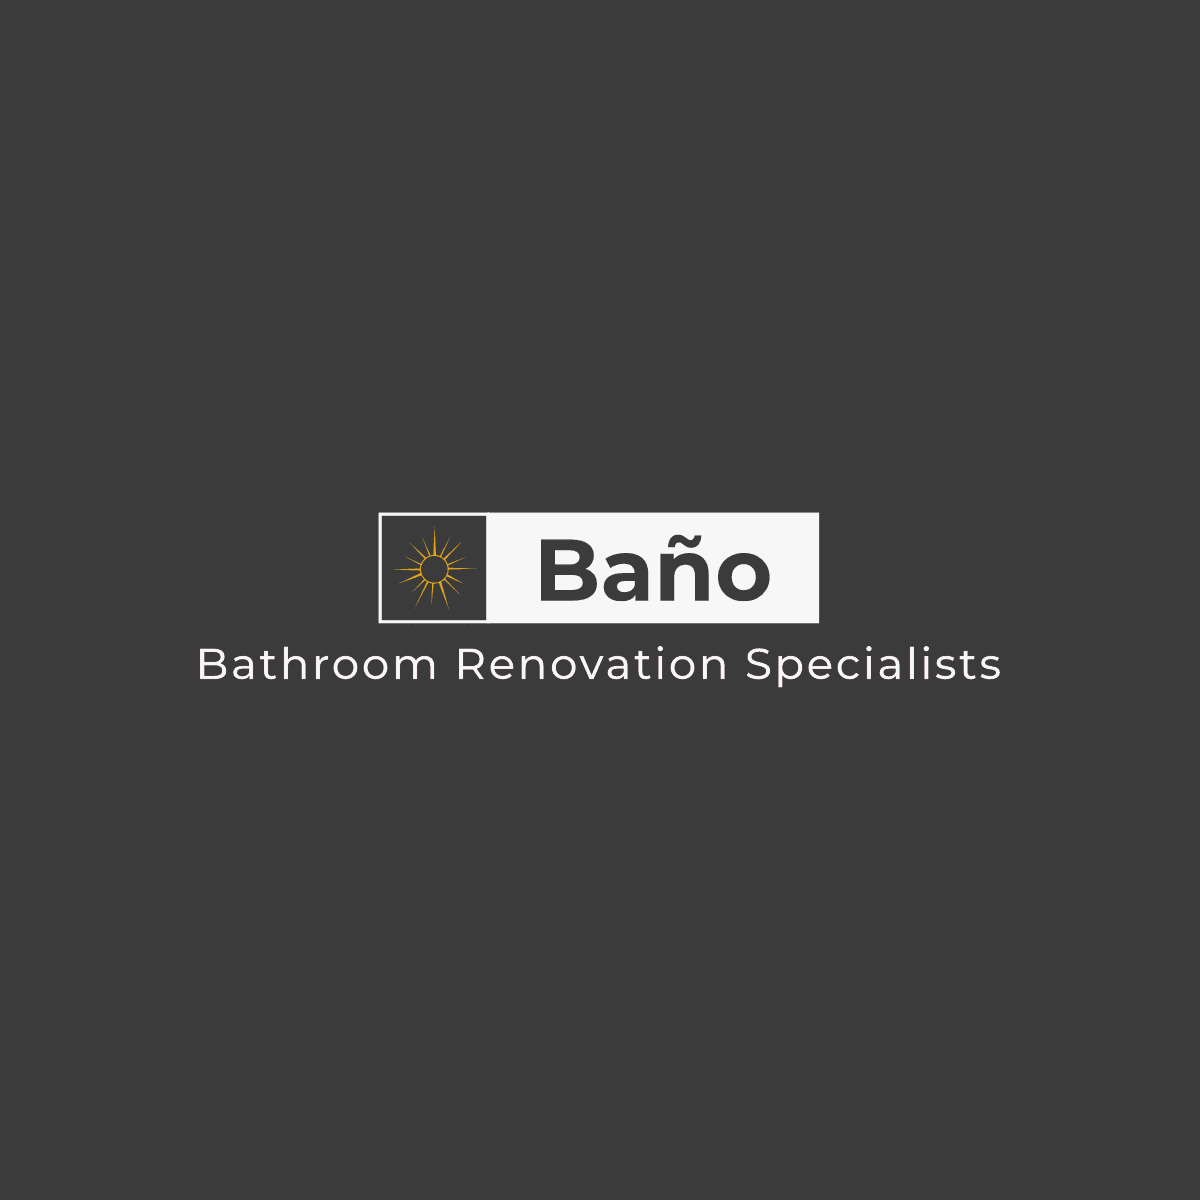 Bano Bathroom Renovation Specialists - Manchester, Lancashire M26 3UN - 07730 783550 | ShowMeLocal.com